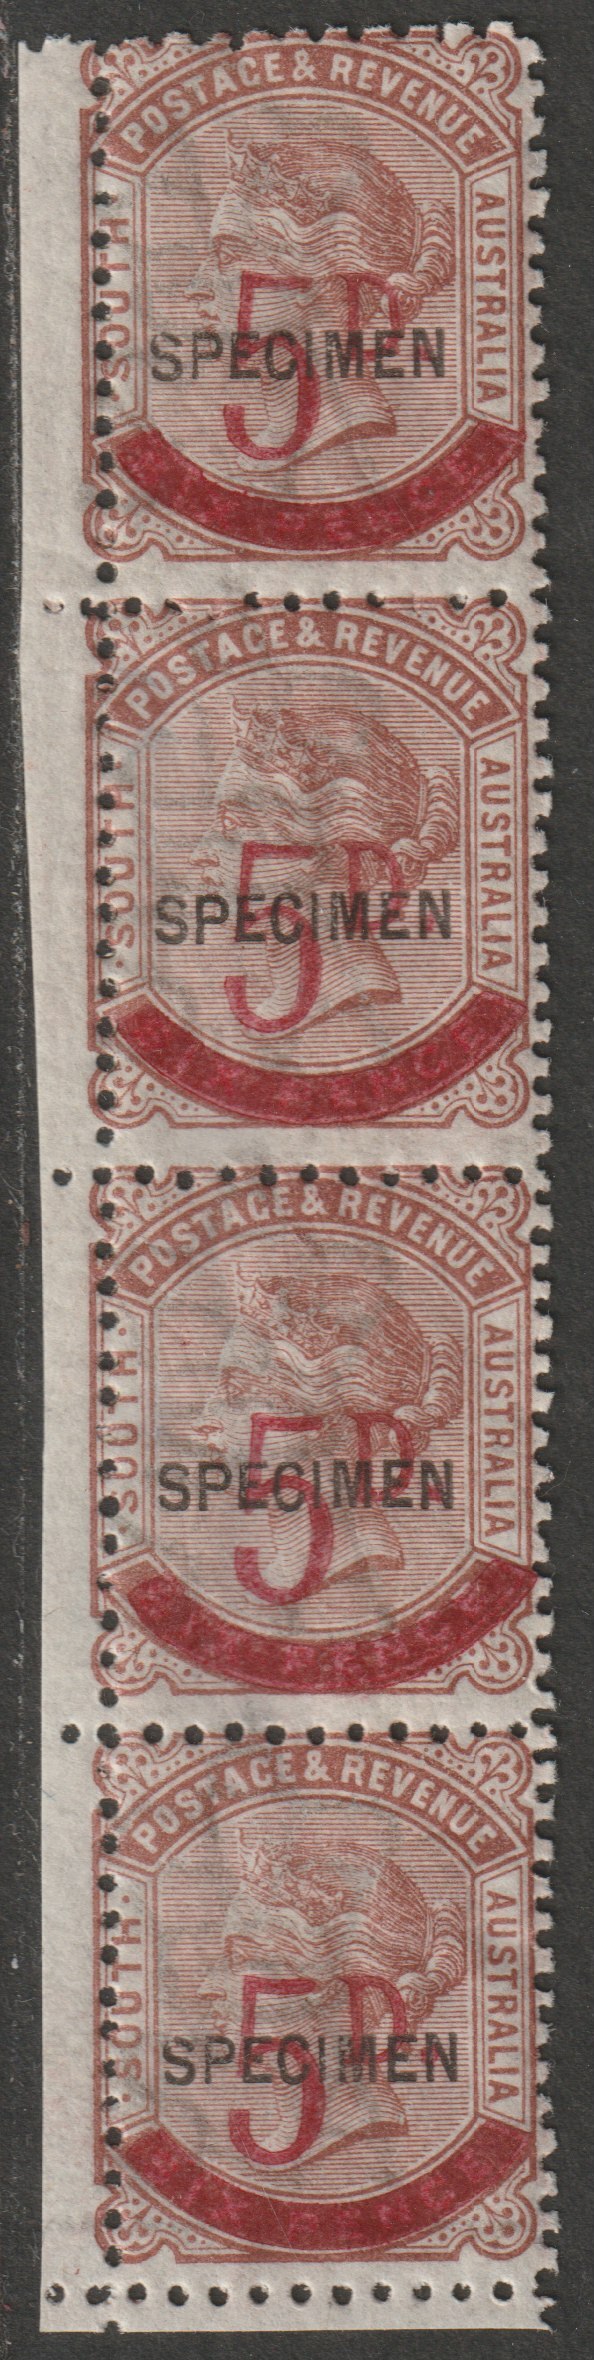 South Australia 1891 QV 5d on 6d vert strip of 4 overprinted SPECIMEN disturbed gum but only 345 produced SG 230s. Specimen multiples are rare, stamps on specimens